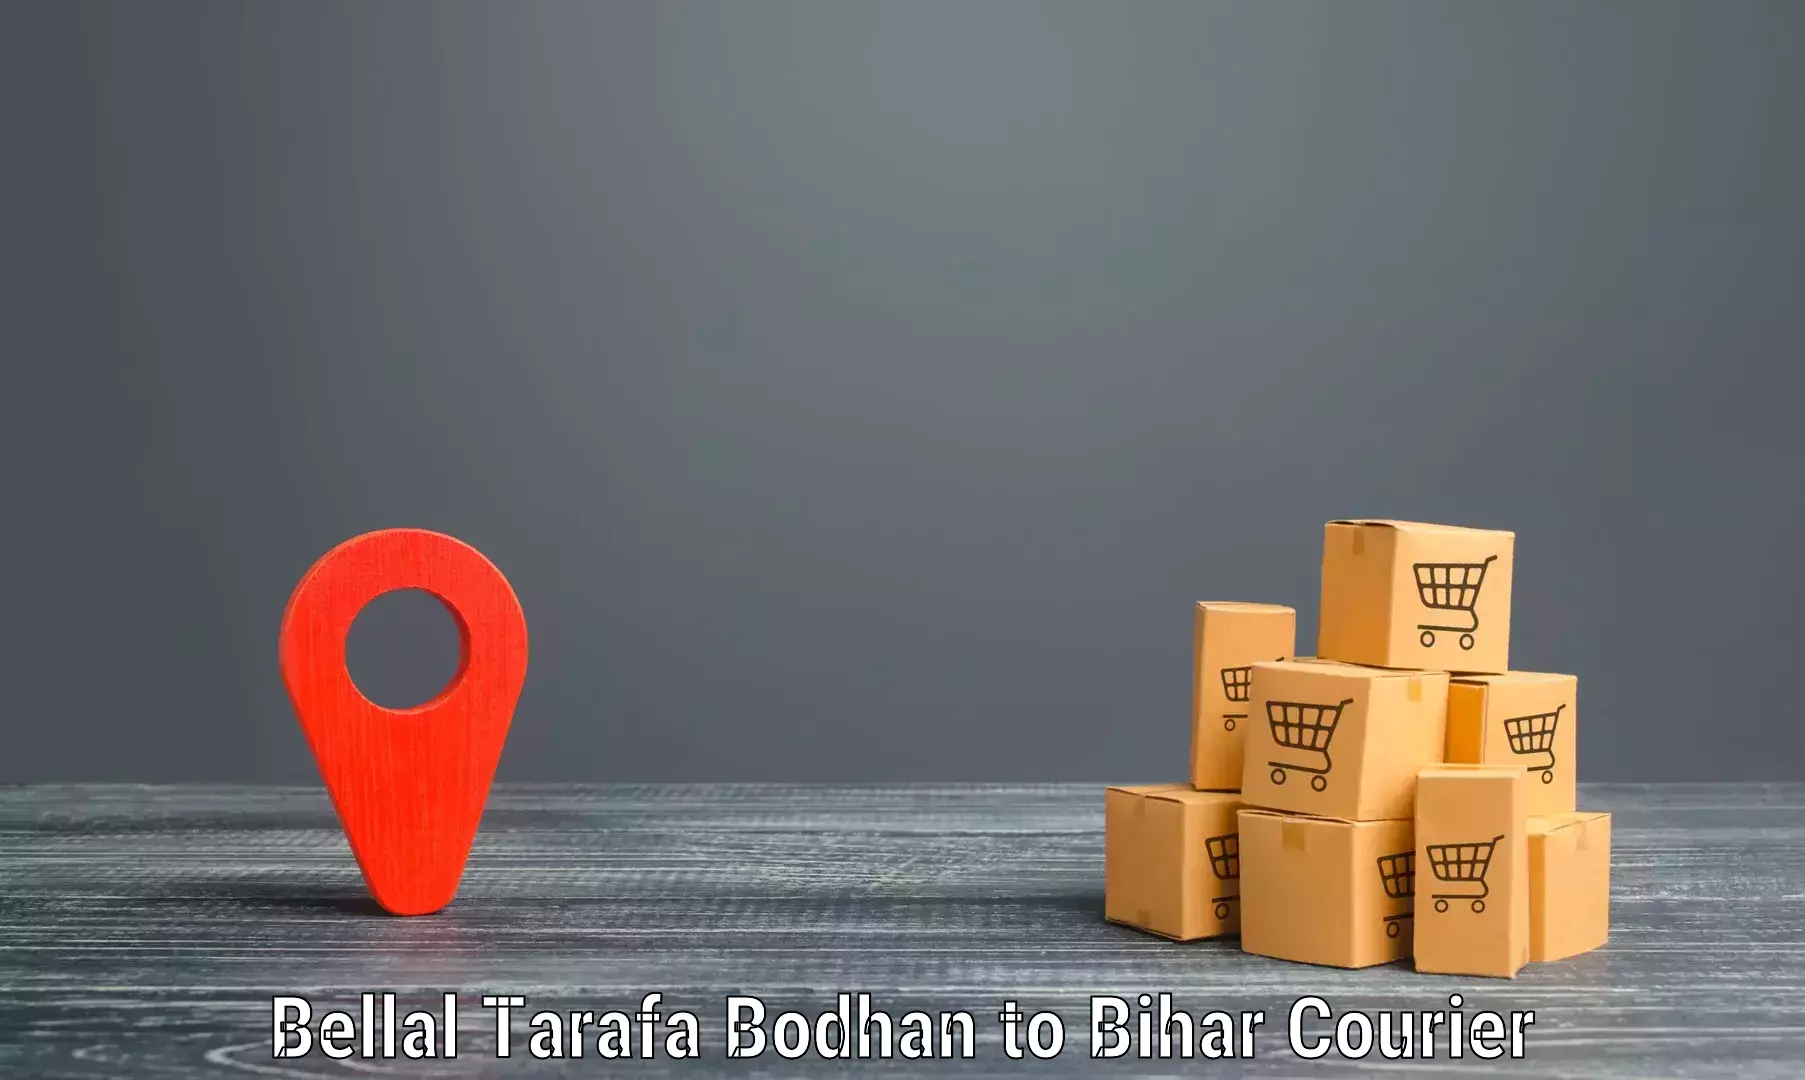 Courier app Bellal Tarafa Bodhan to Piro